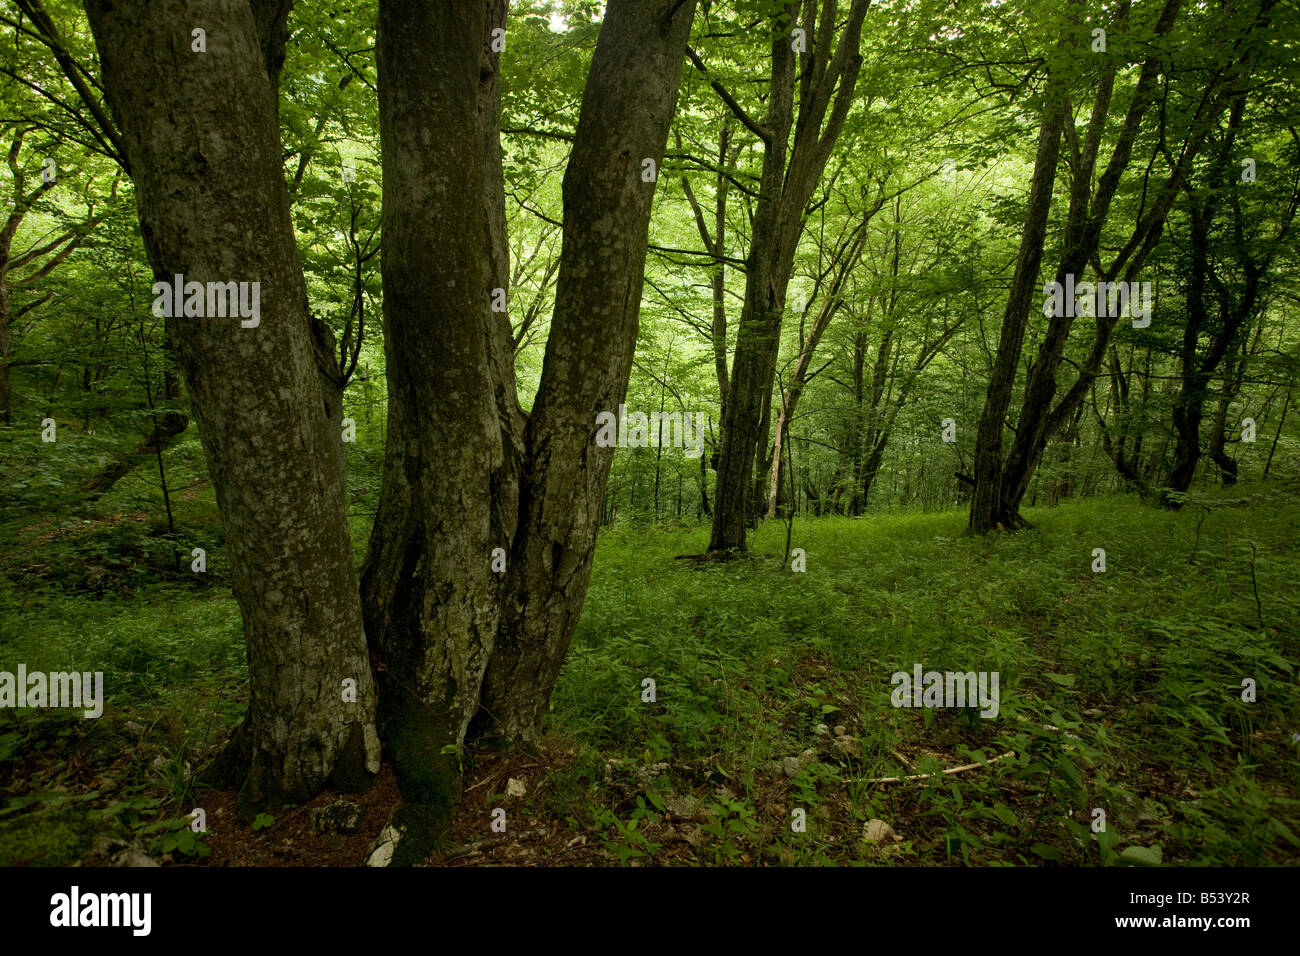 Old coppiced hornbeam woodland Carpinus betulus in the Varghis Gorge near Baraolt Central Romania Stock Photo